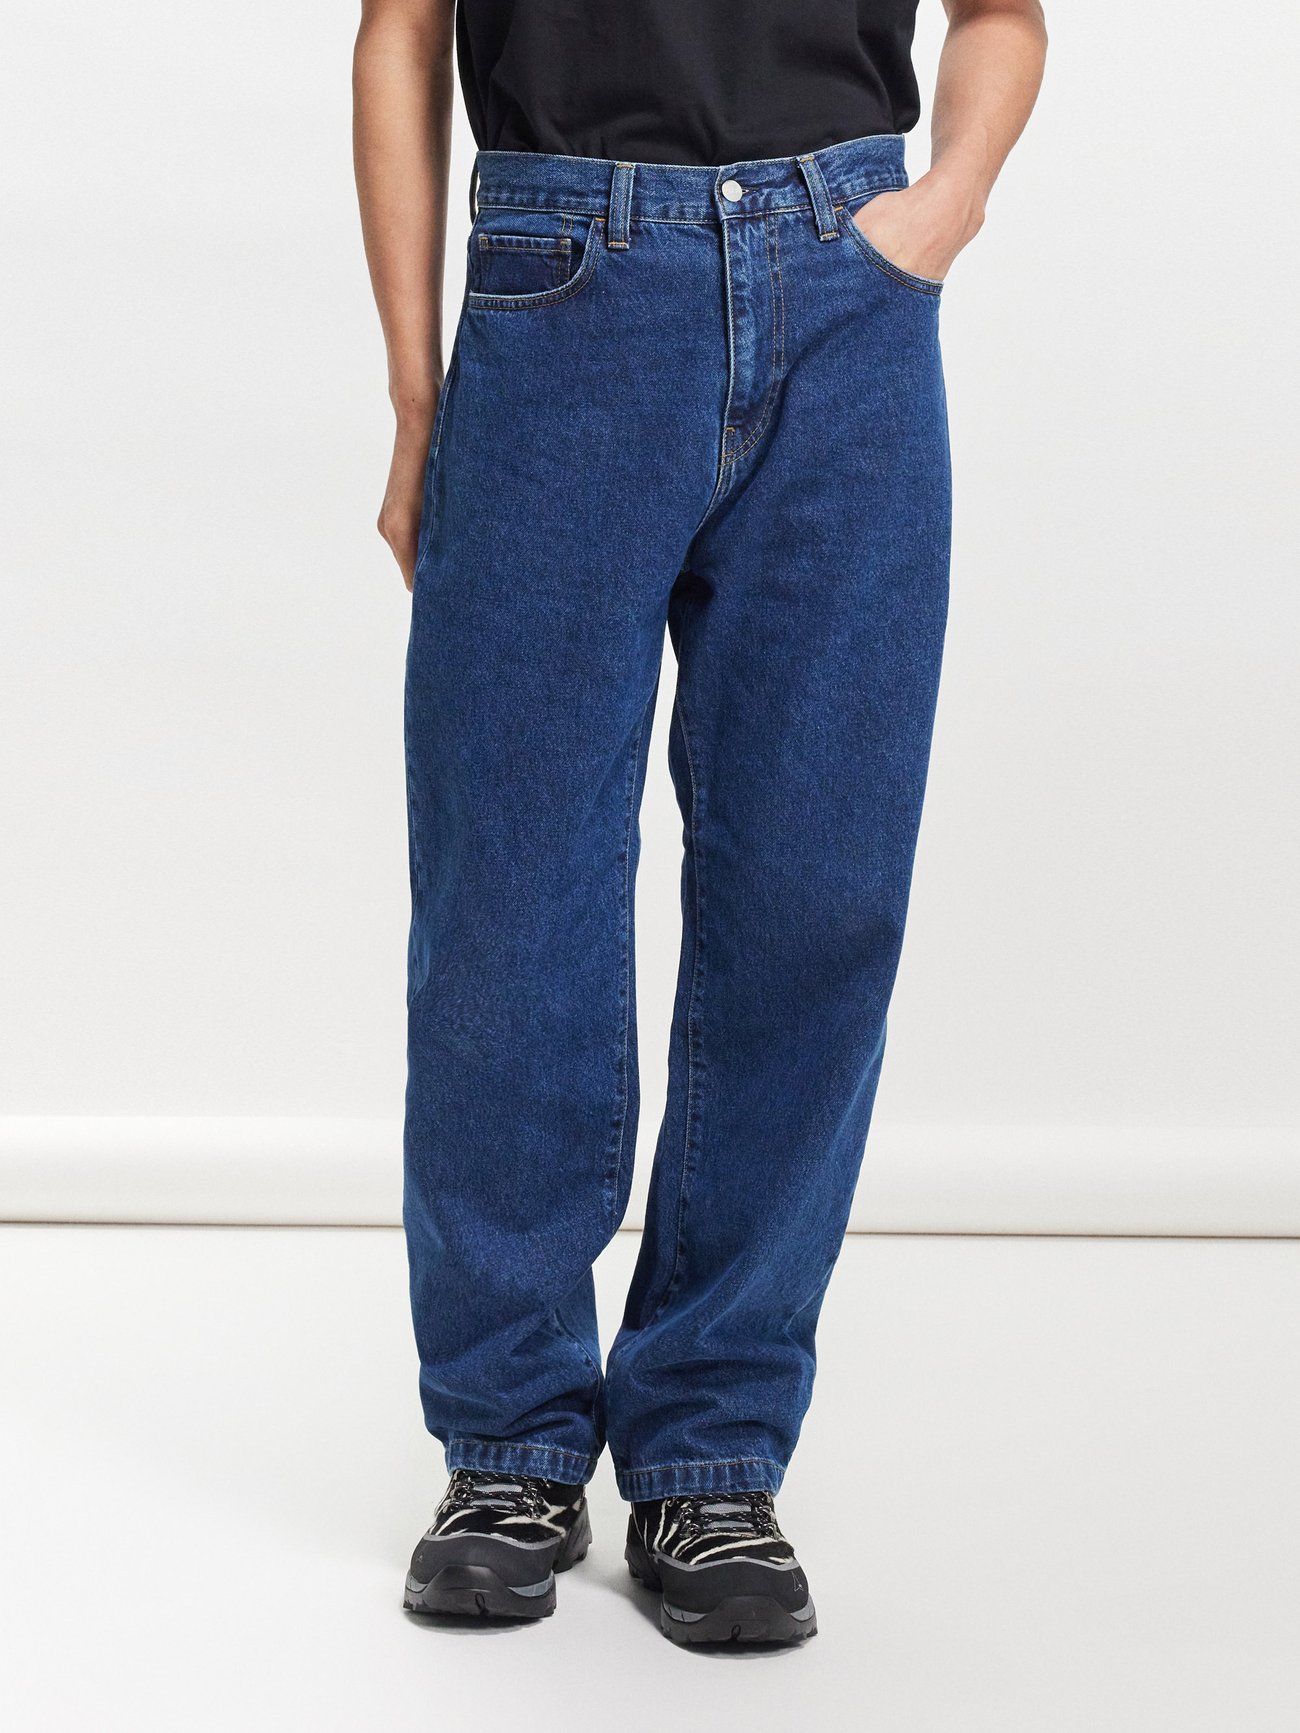 Blue Landon tapered-leg jeans, Carhartt WIP